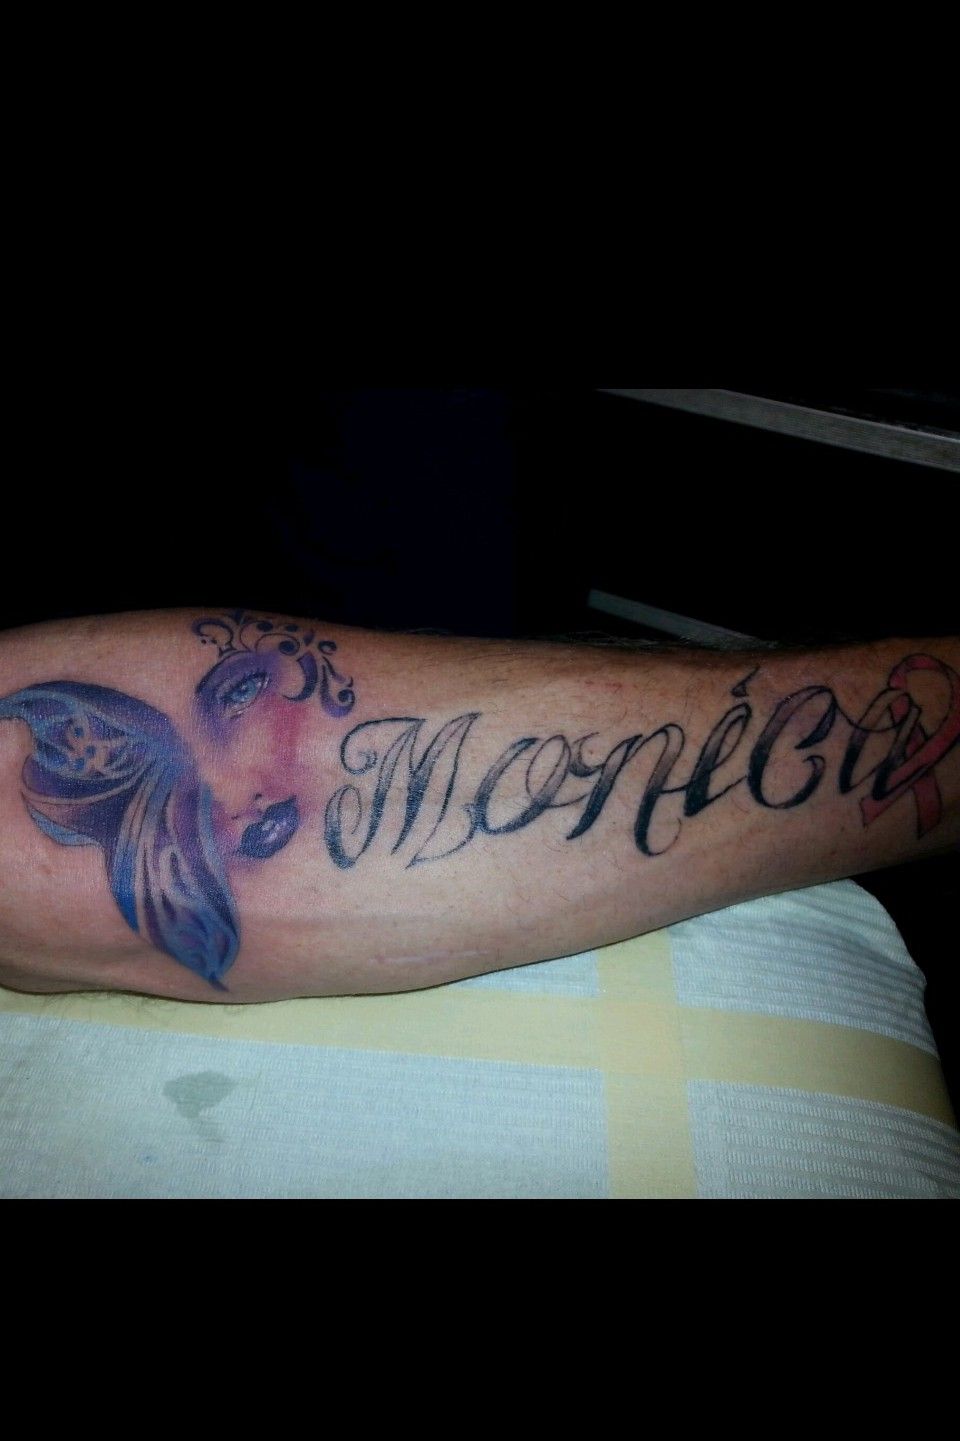 Fibromyalgia Warrior  by Allayna  Artistic Ink Tattoo Studio  Facebook